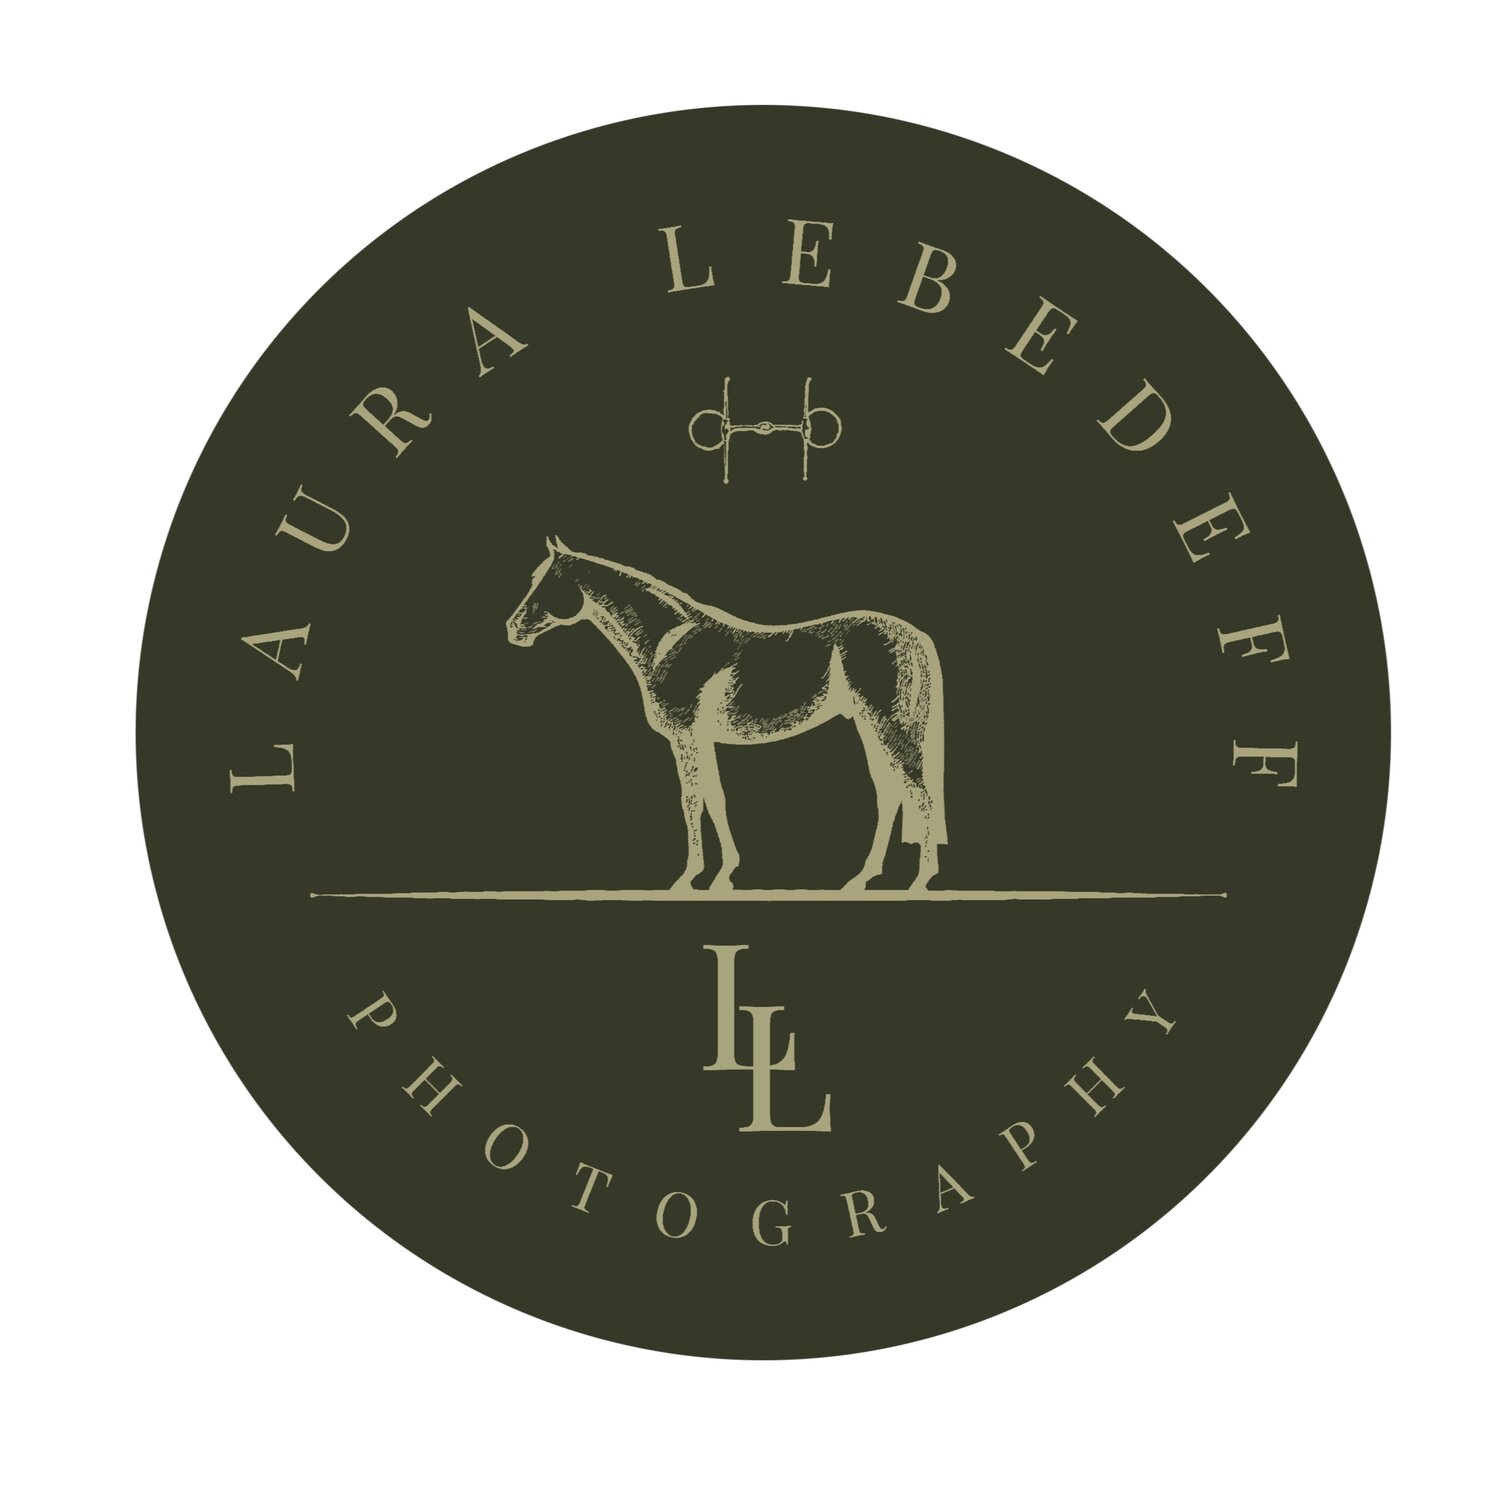 LAURA LEBEDEFF PHOTOGRAPHY - EQUINE PHOTOGRAPHER 